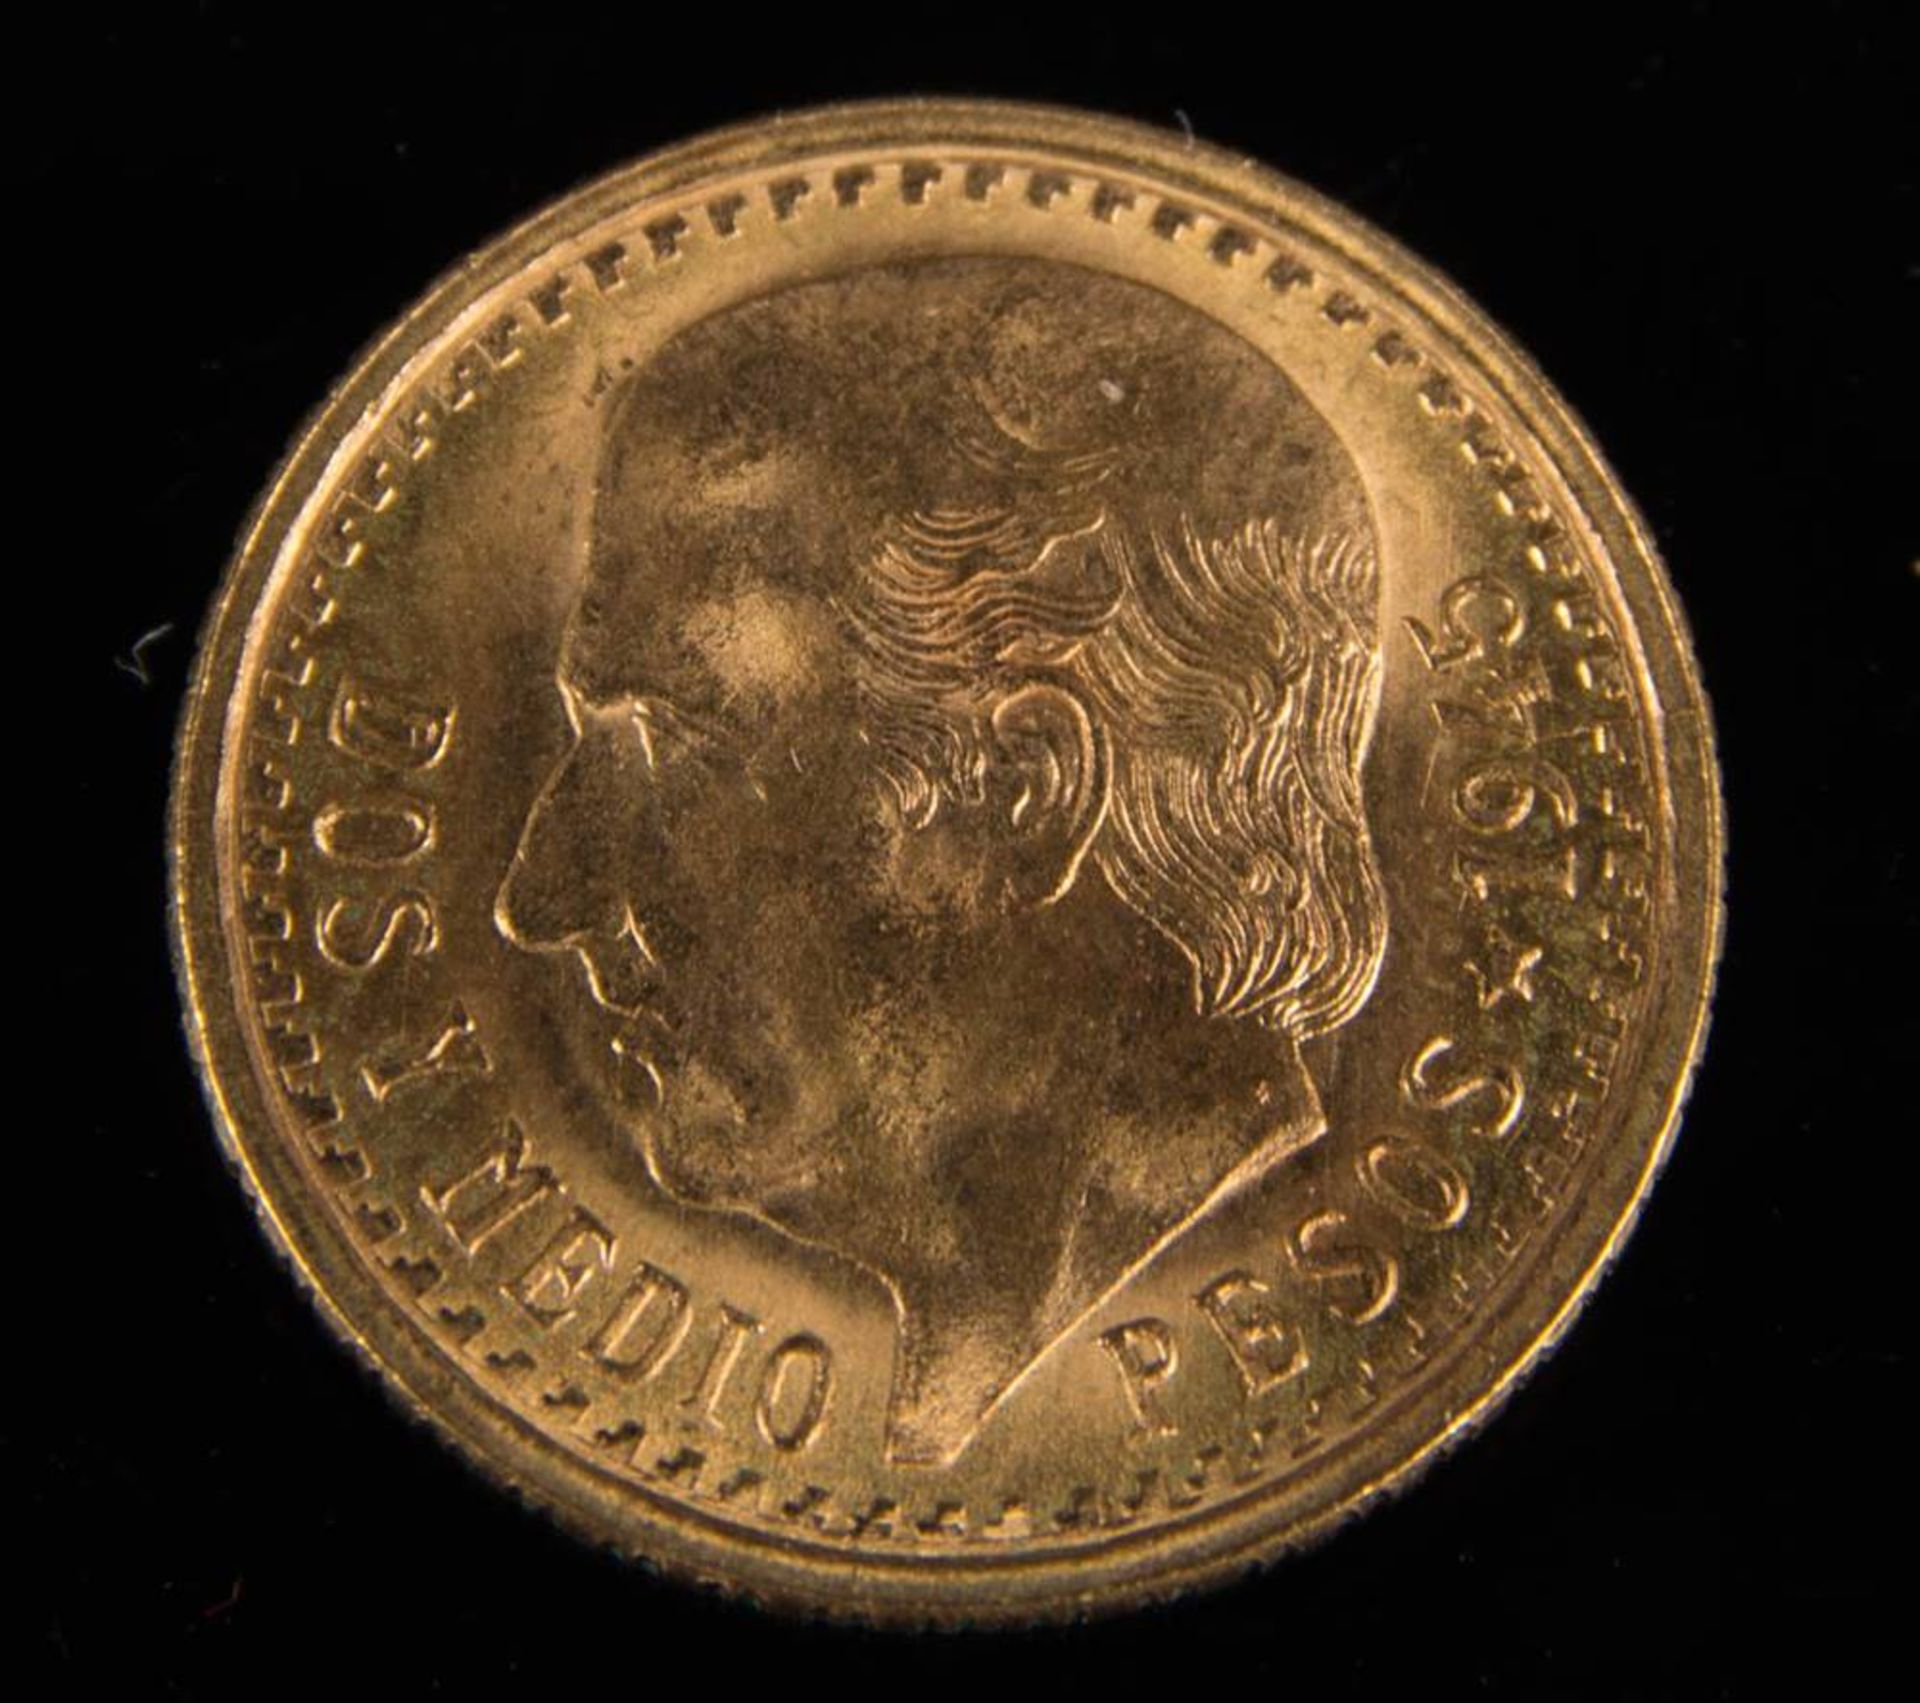 Mexiko: 2,5 Pesos Gold 1945 "Hidalgo". - Bild 2 aus 2